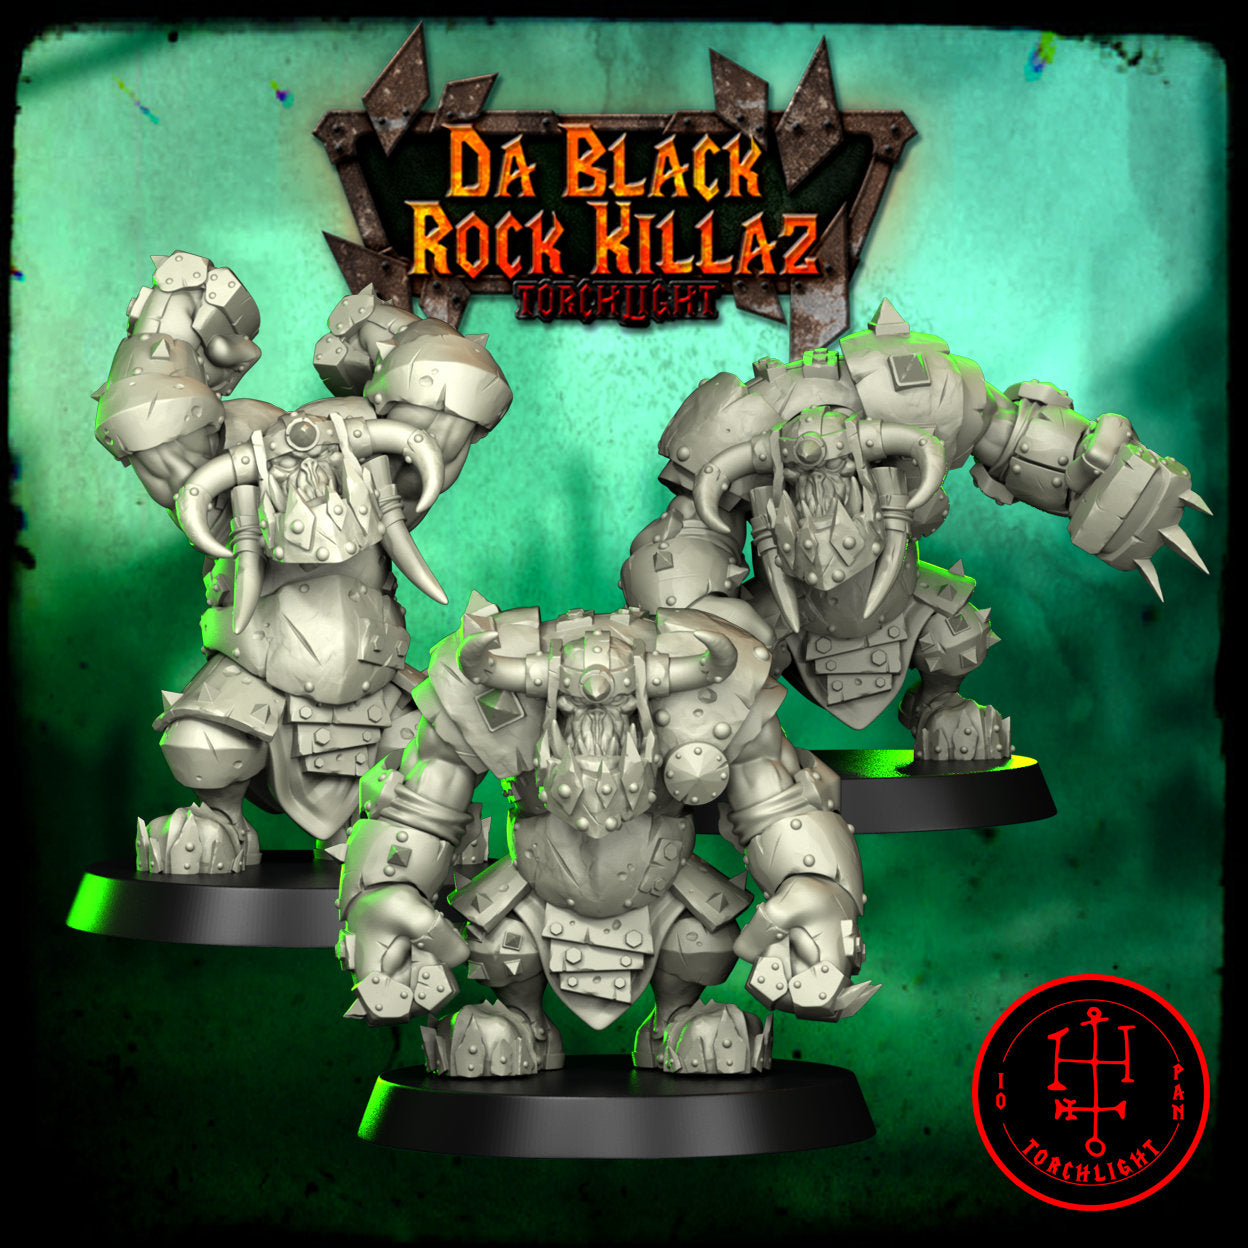 Da Black Rock Killas - Obsidian Orc Fantasy Football Team - 15 Players - Torchlight Models